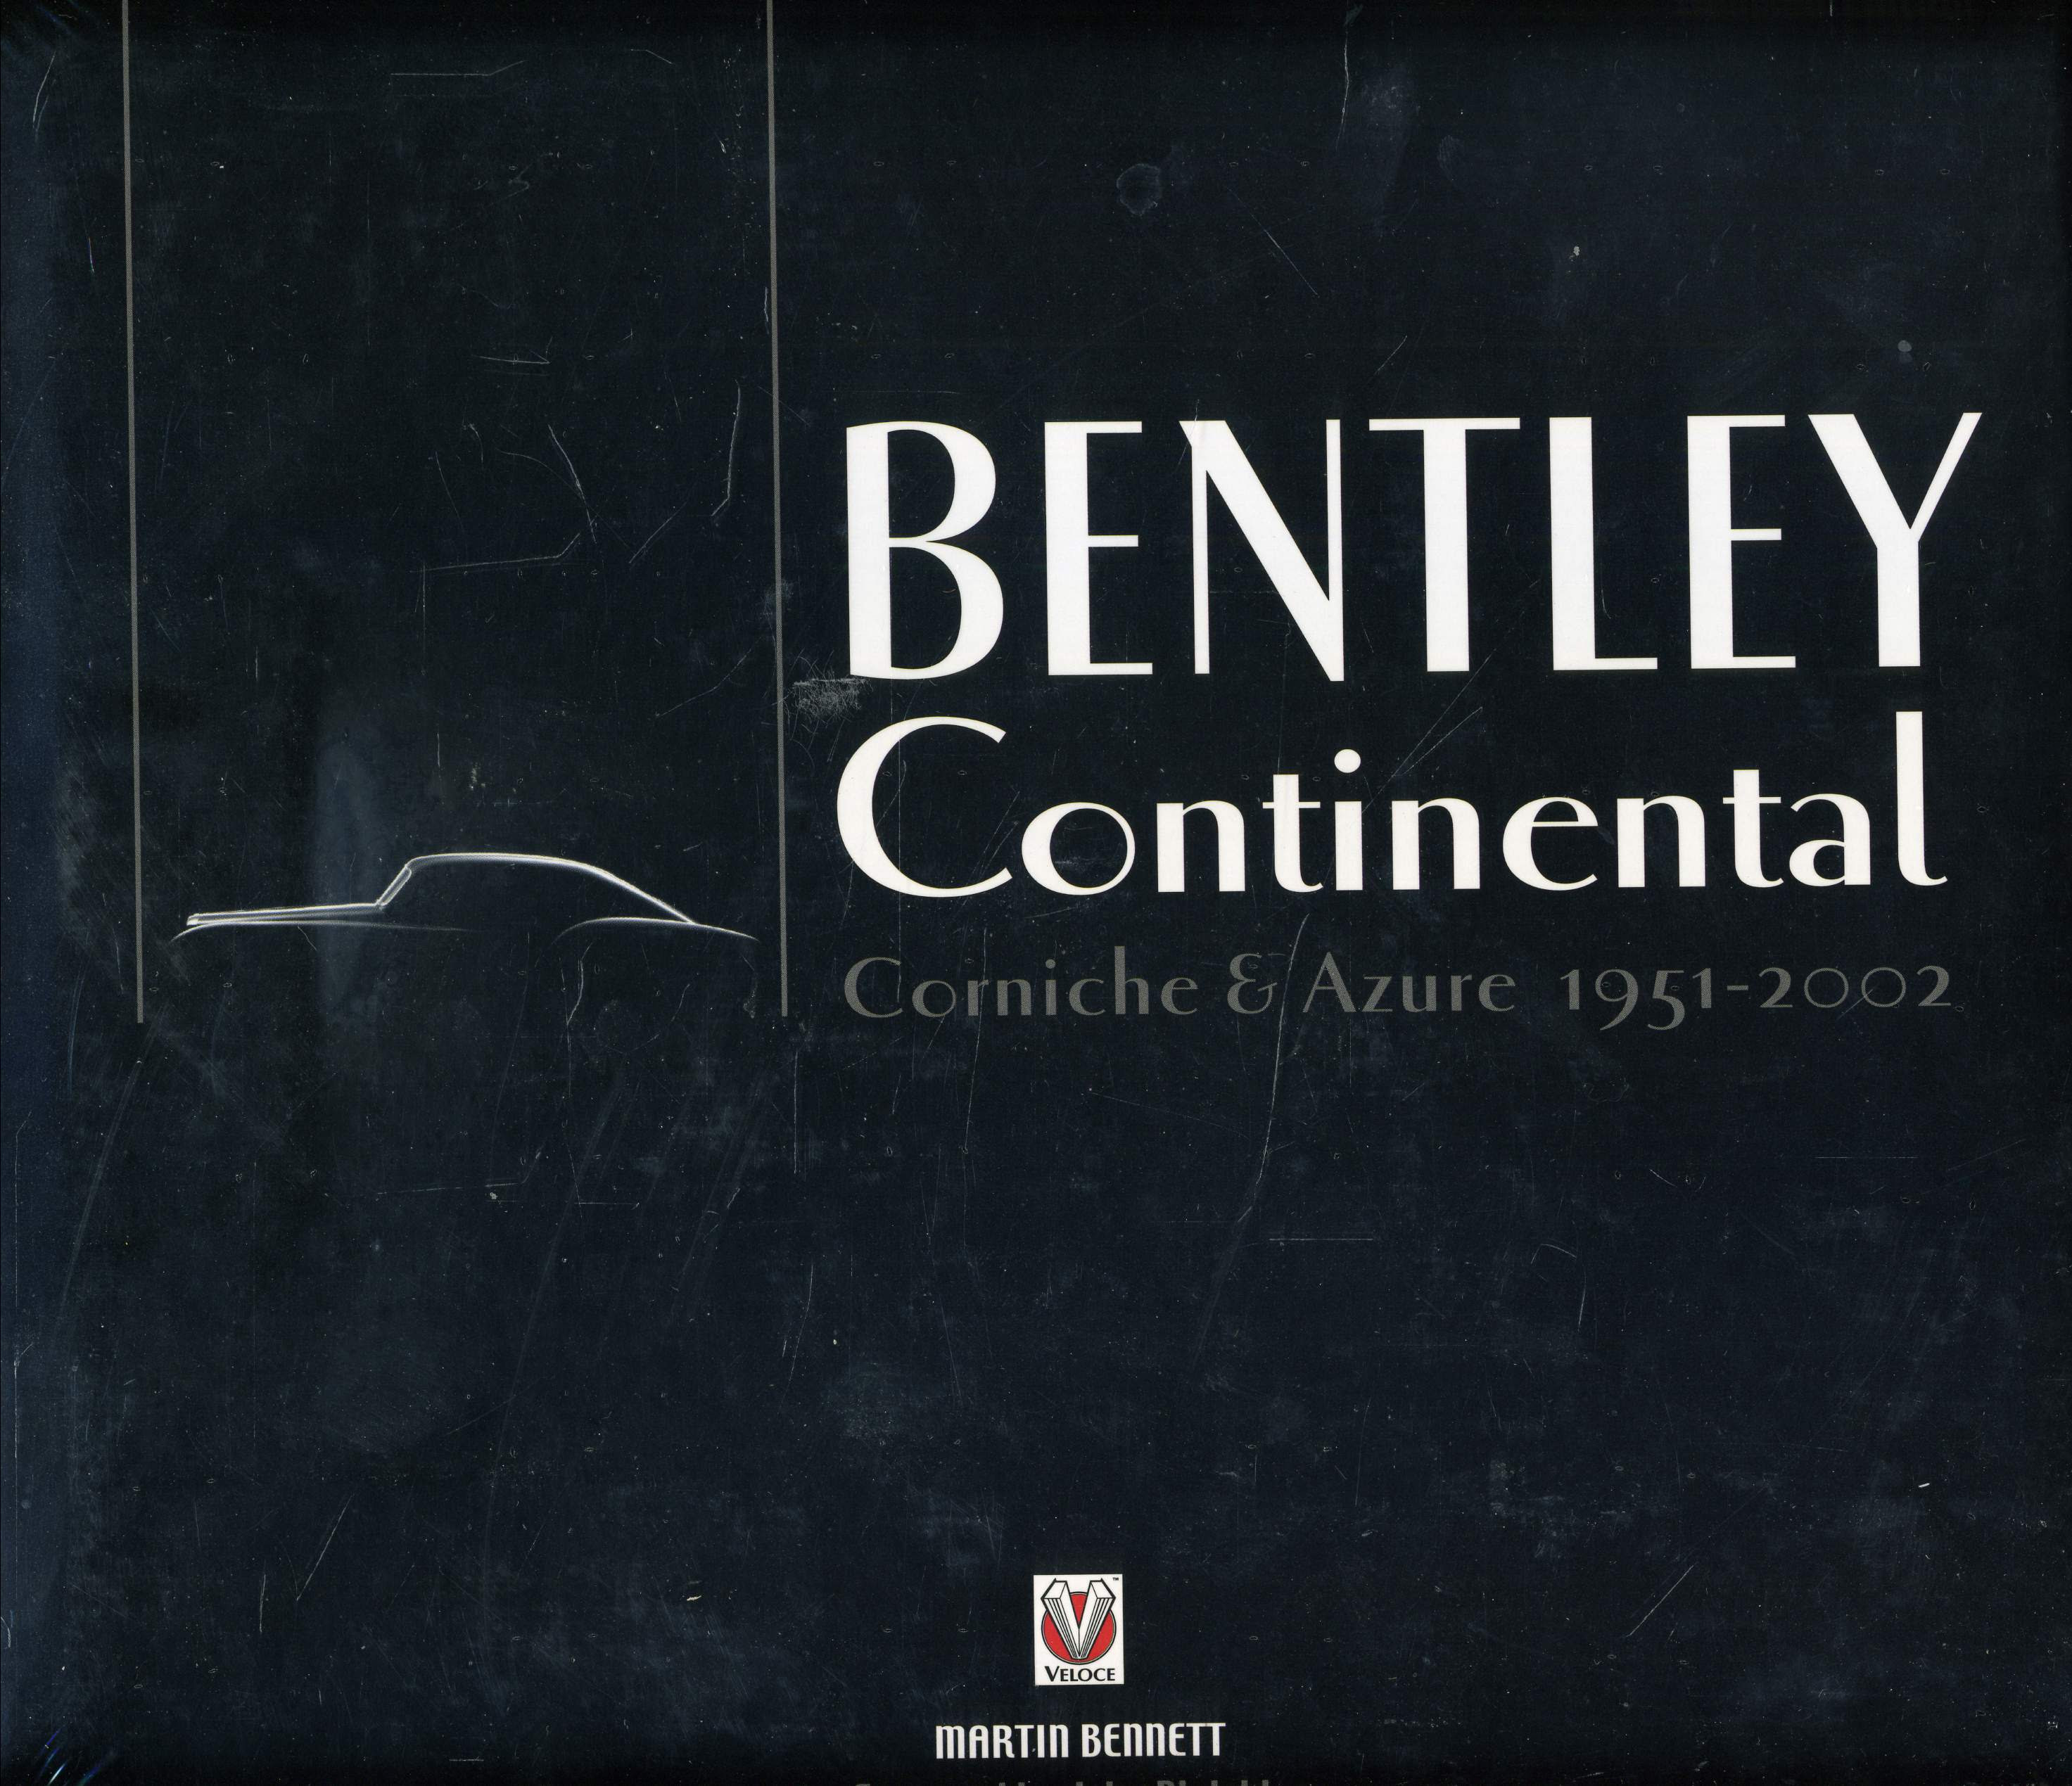 BENTLEY CONTINENTAL, Corniche and Azure 1951 - 2002 NEW | eBay